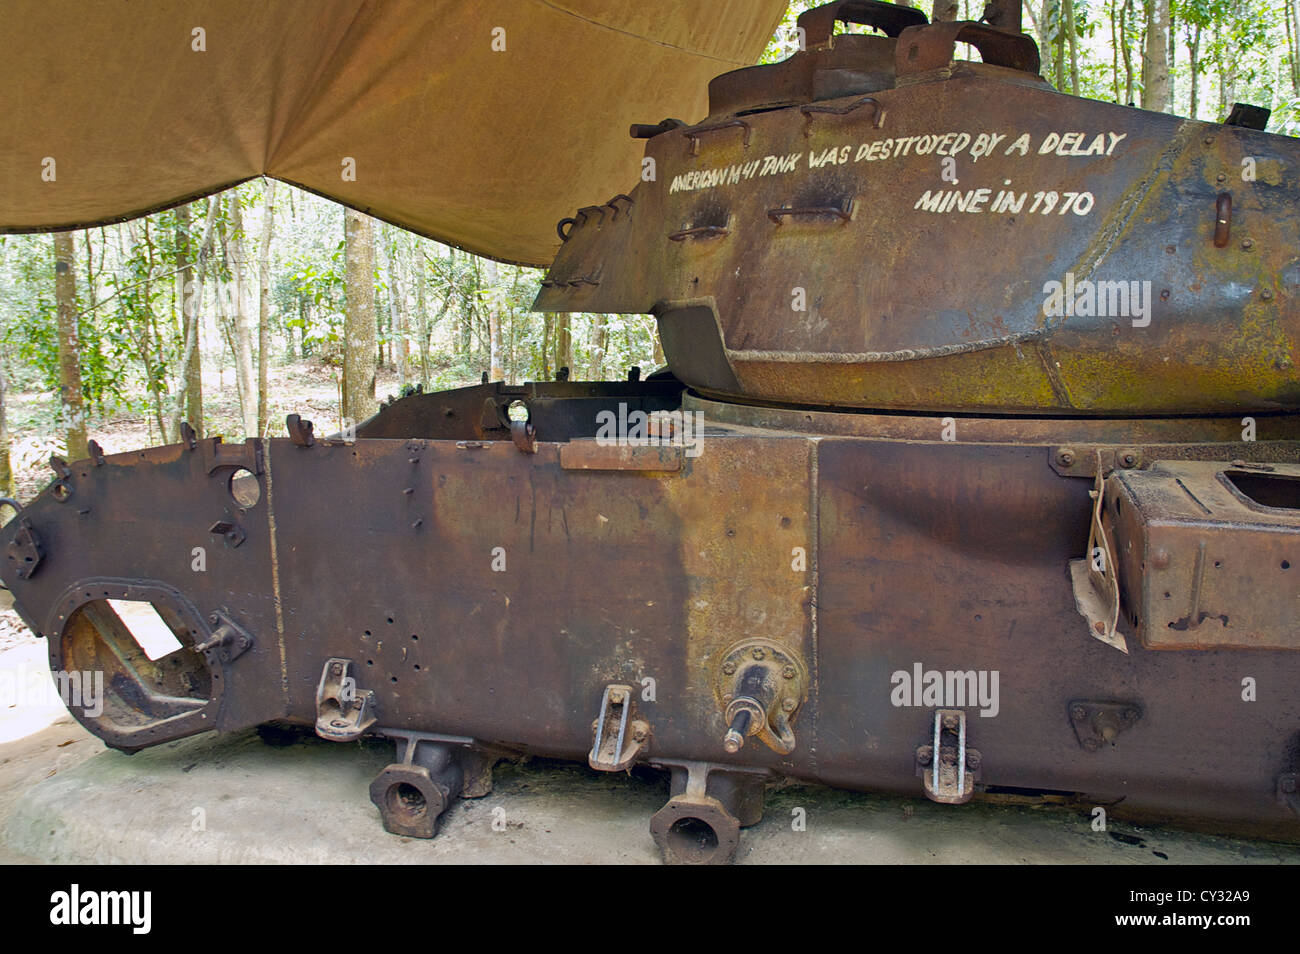 Destroyed American tank, Cu Chi, Vietnam Stock Photo